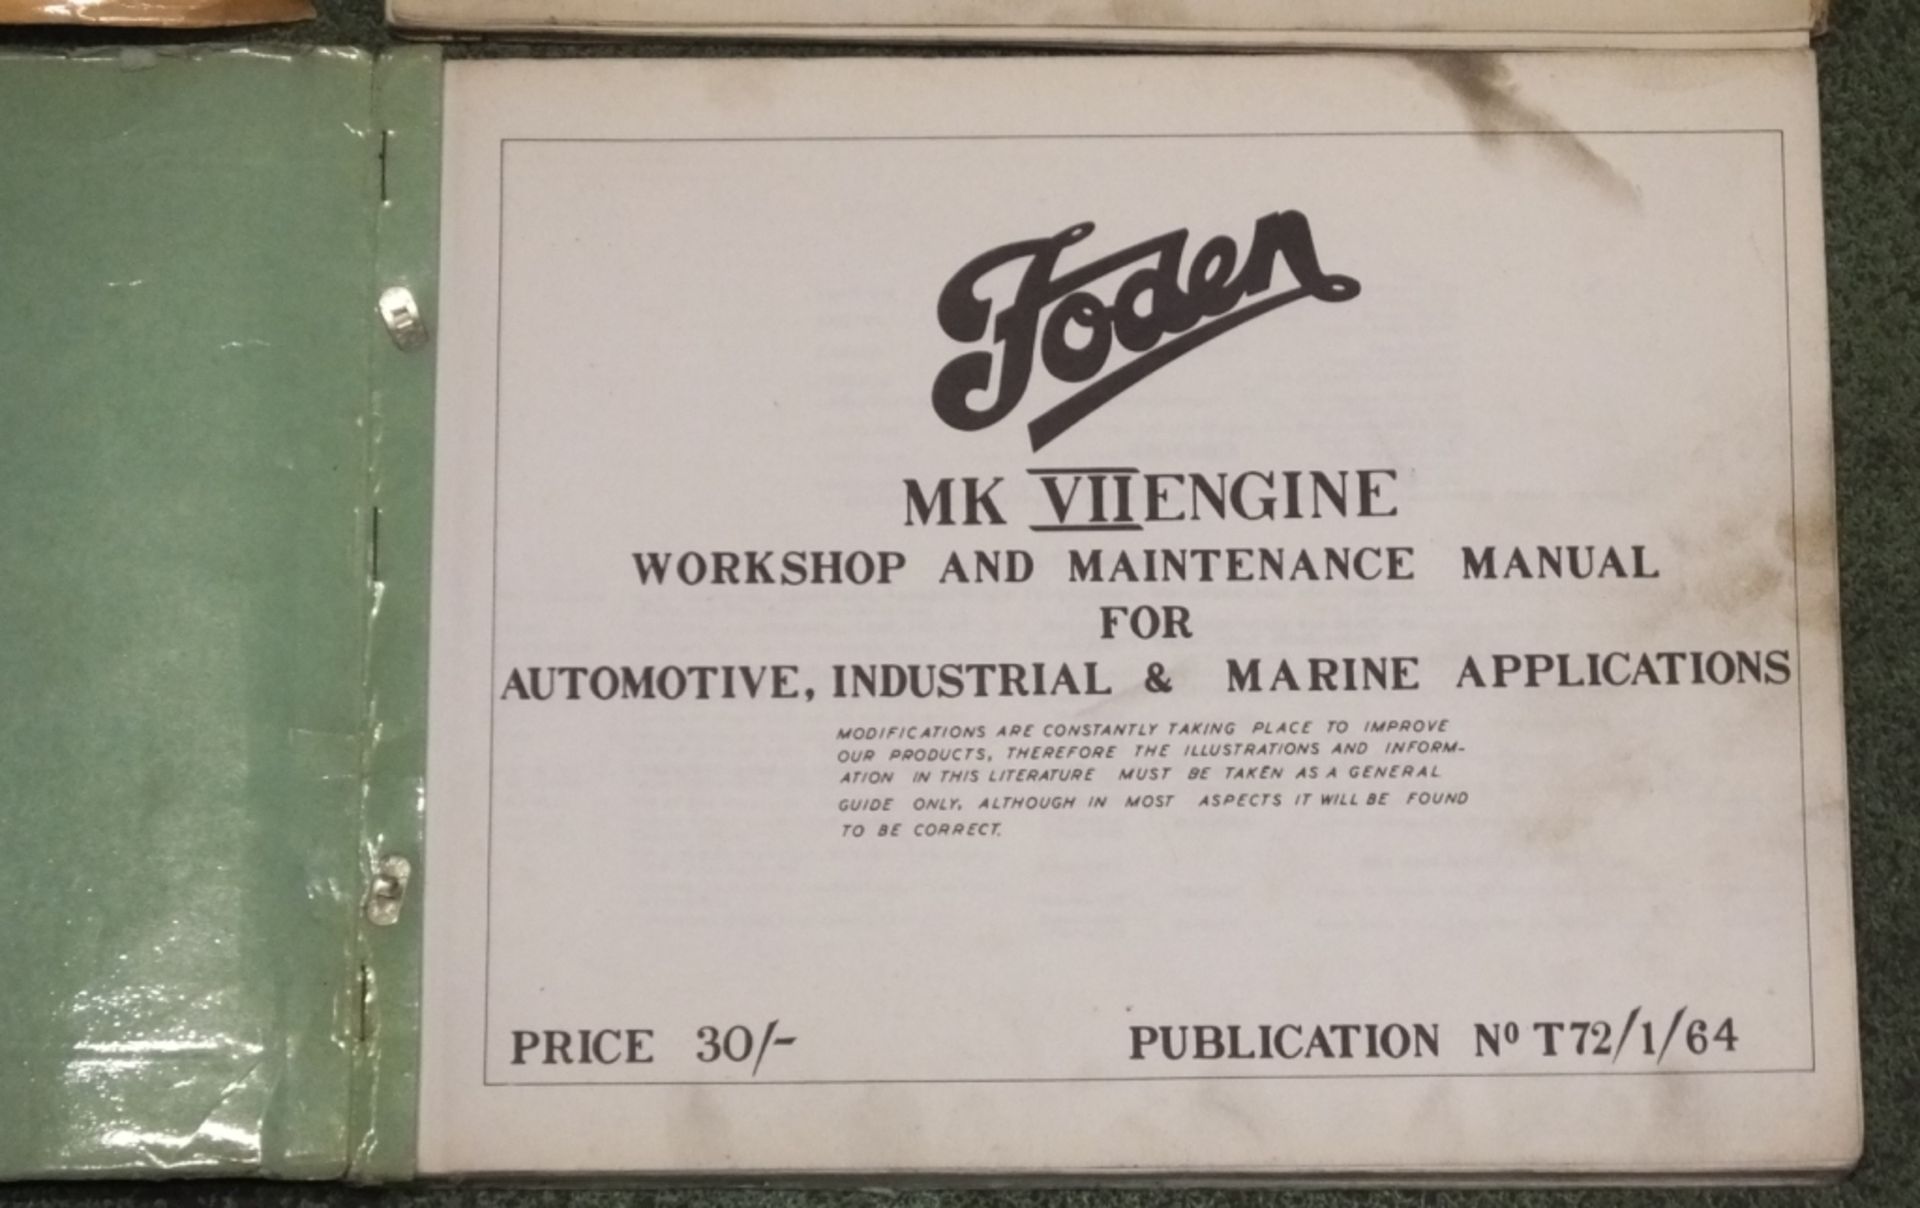 Foden chassis maintenance manual 1961, Foden mkVII Engine workshop manual 1964 - Image 3 of 5